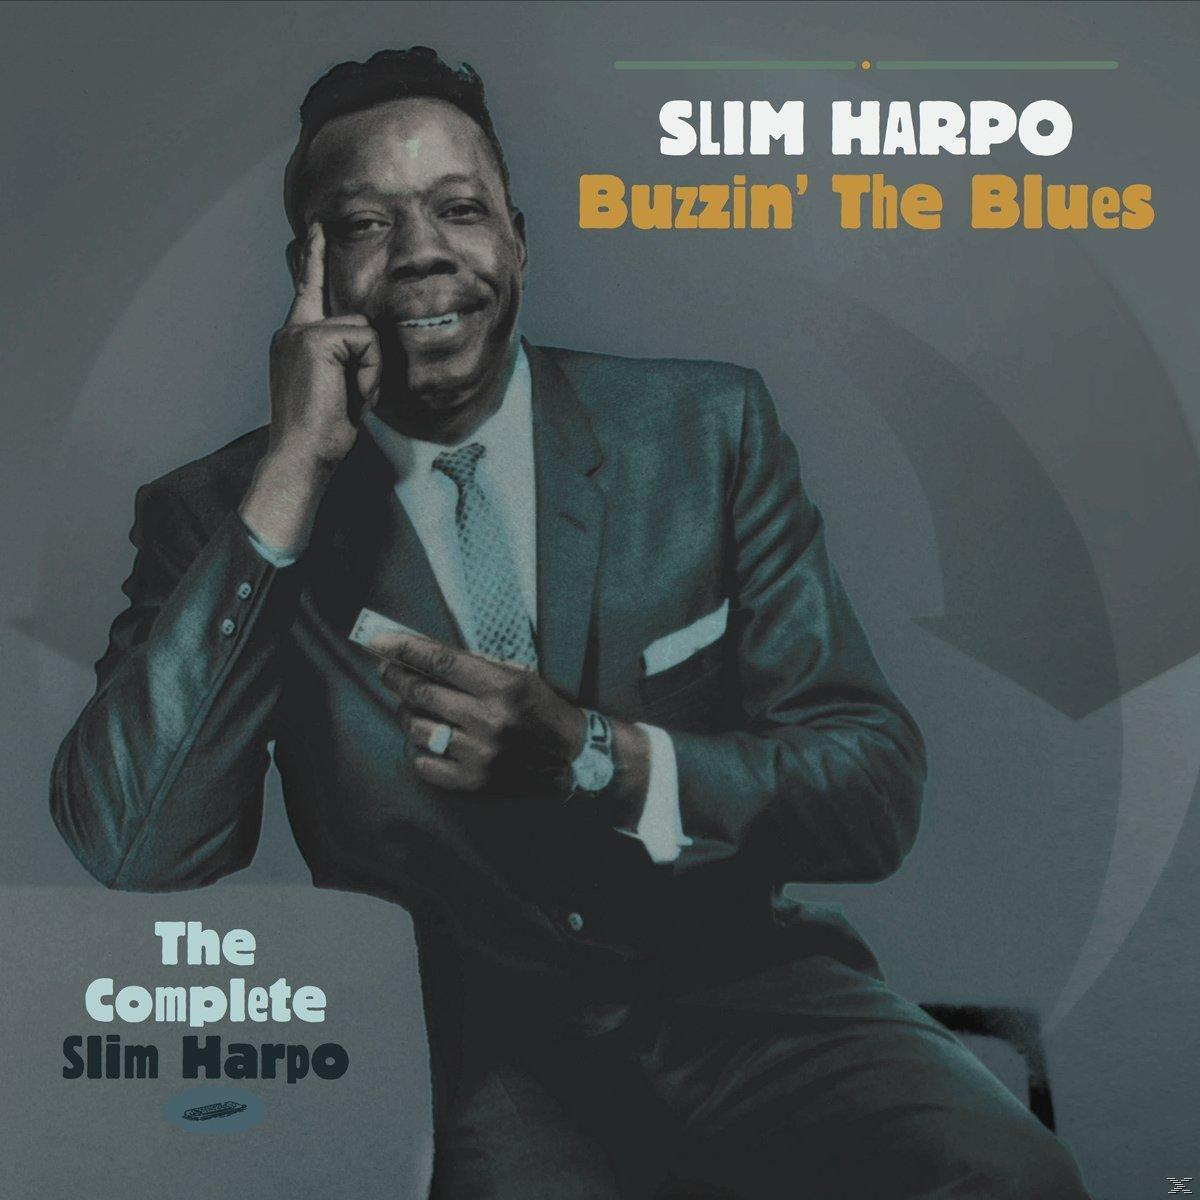 Buzzin\' (CD) - Slim Slim The Complete Harpo - Blues-The Harpo 5-CD